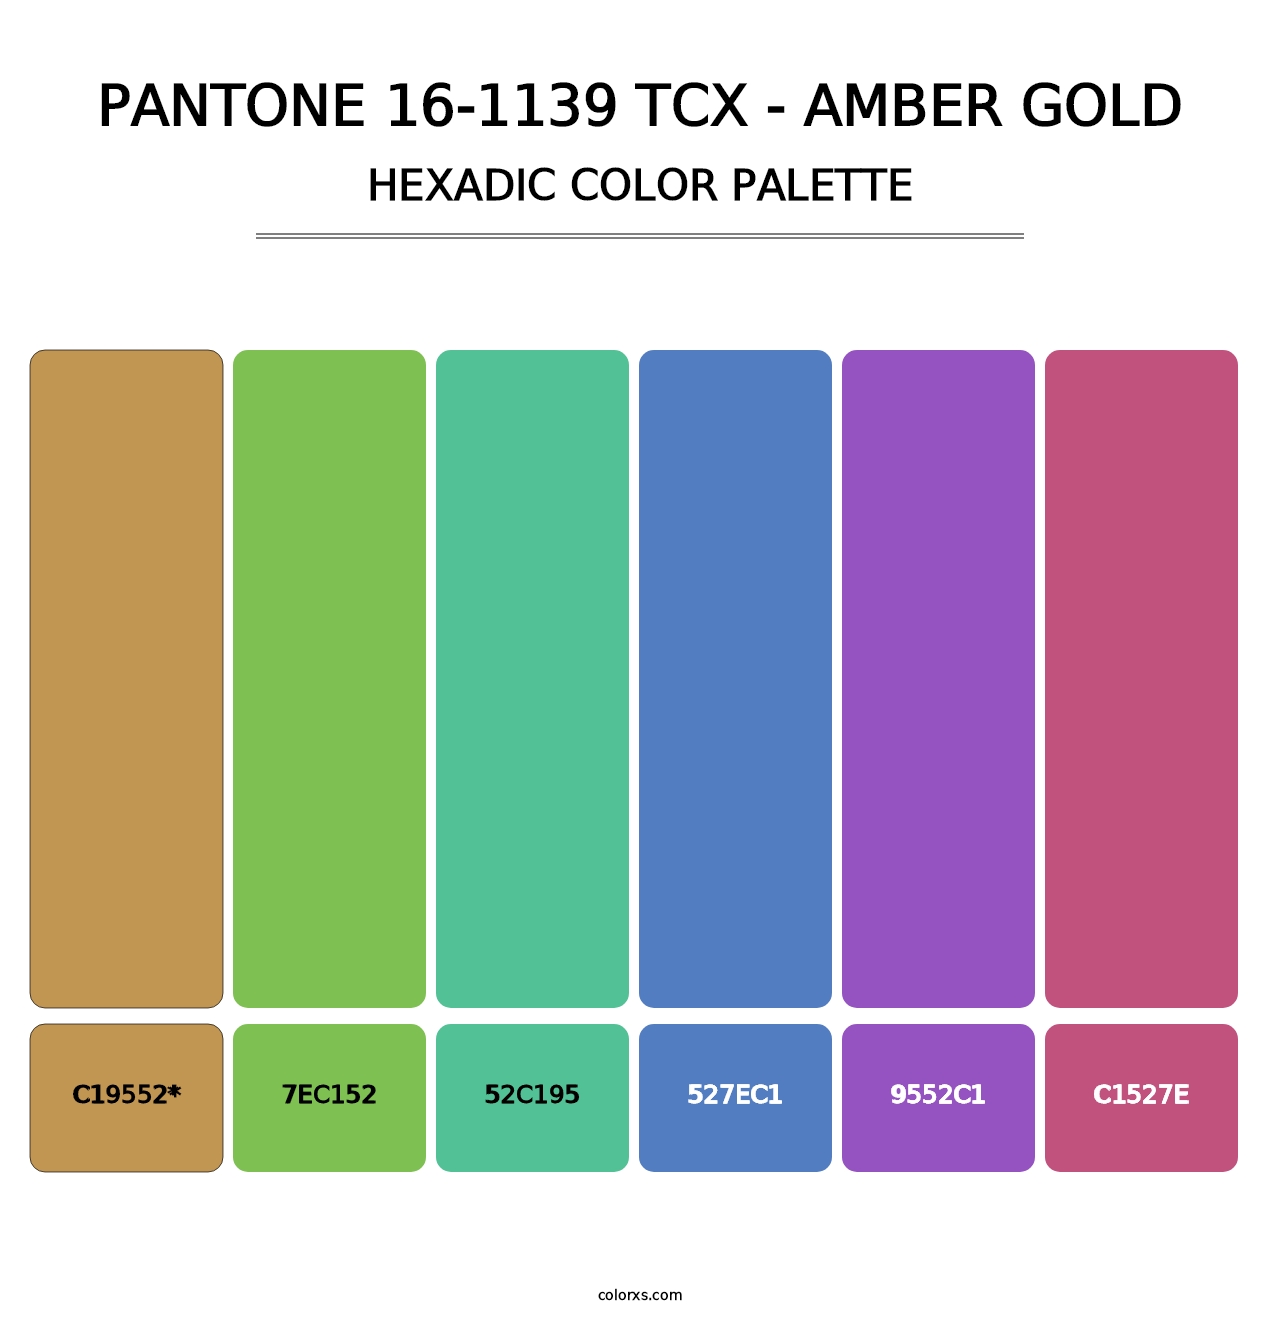 PANTONE 16-1139 TCX - Amber Gold - Hexadic Color Palette